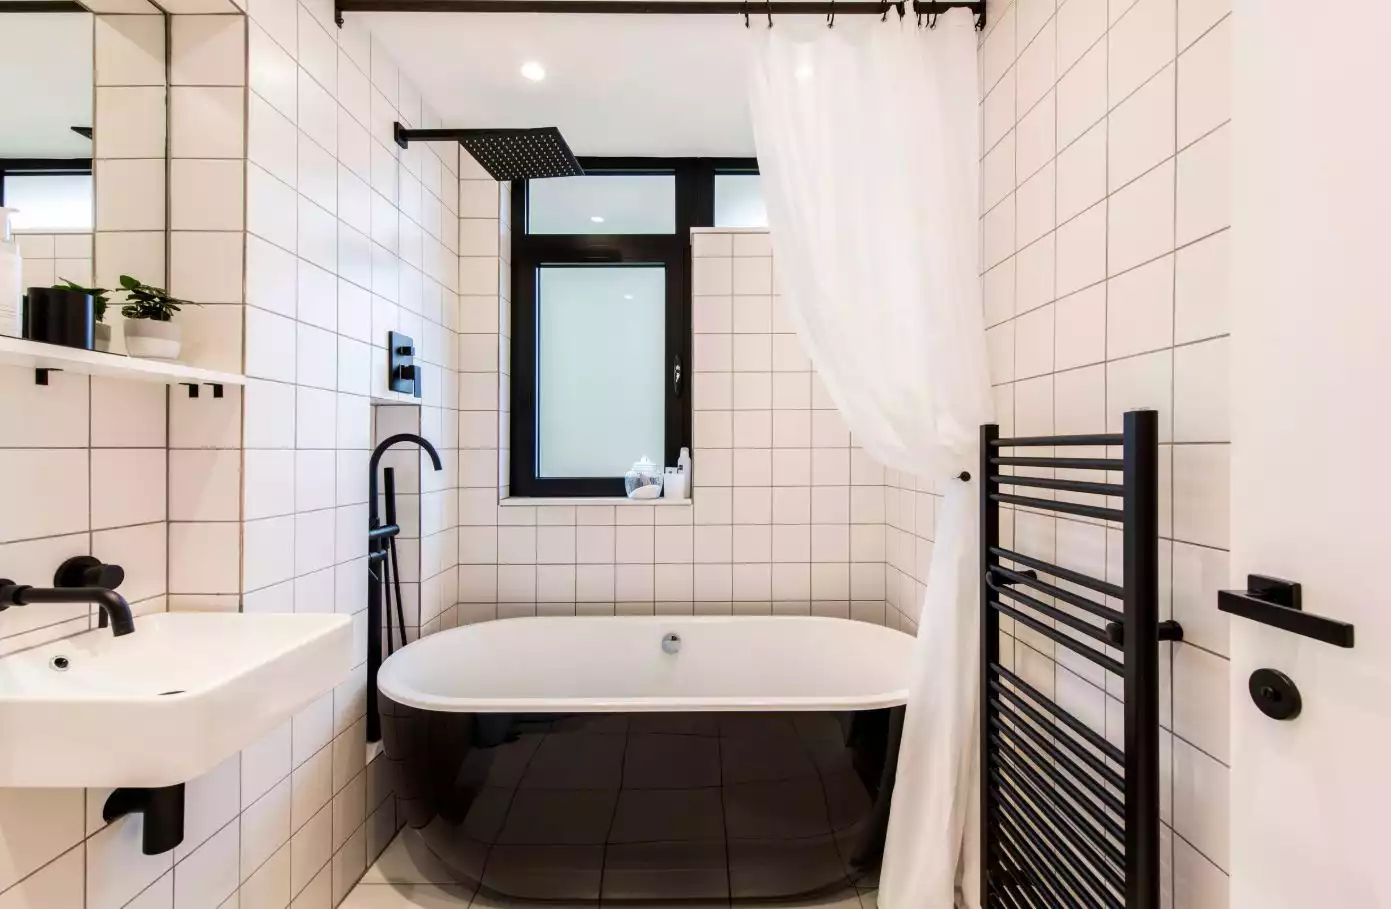 Bathroom with black fixtures accents